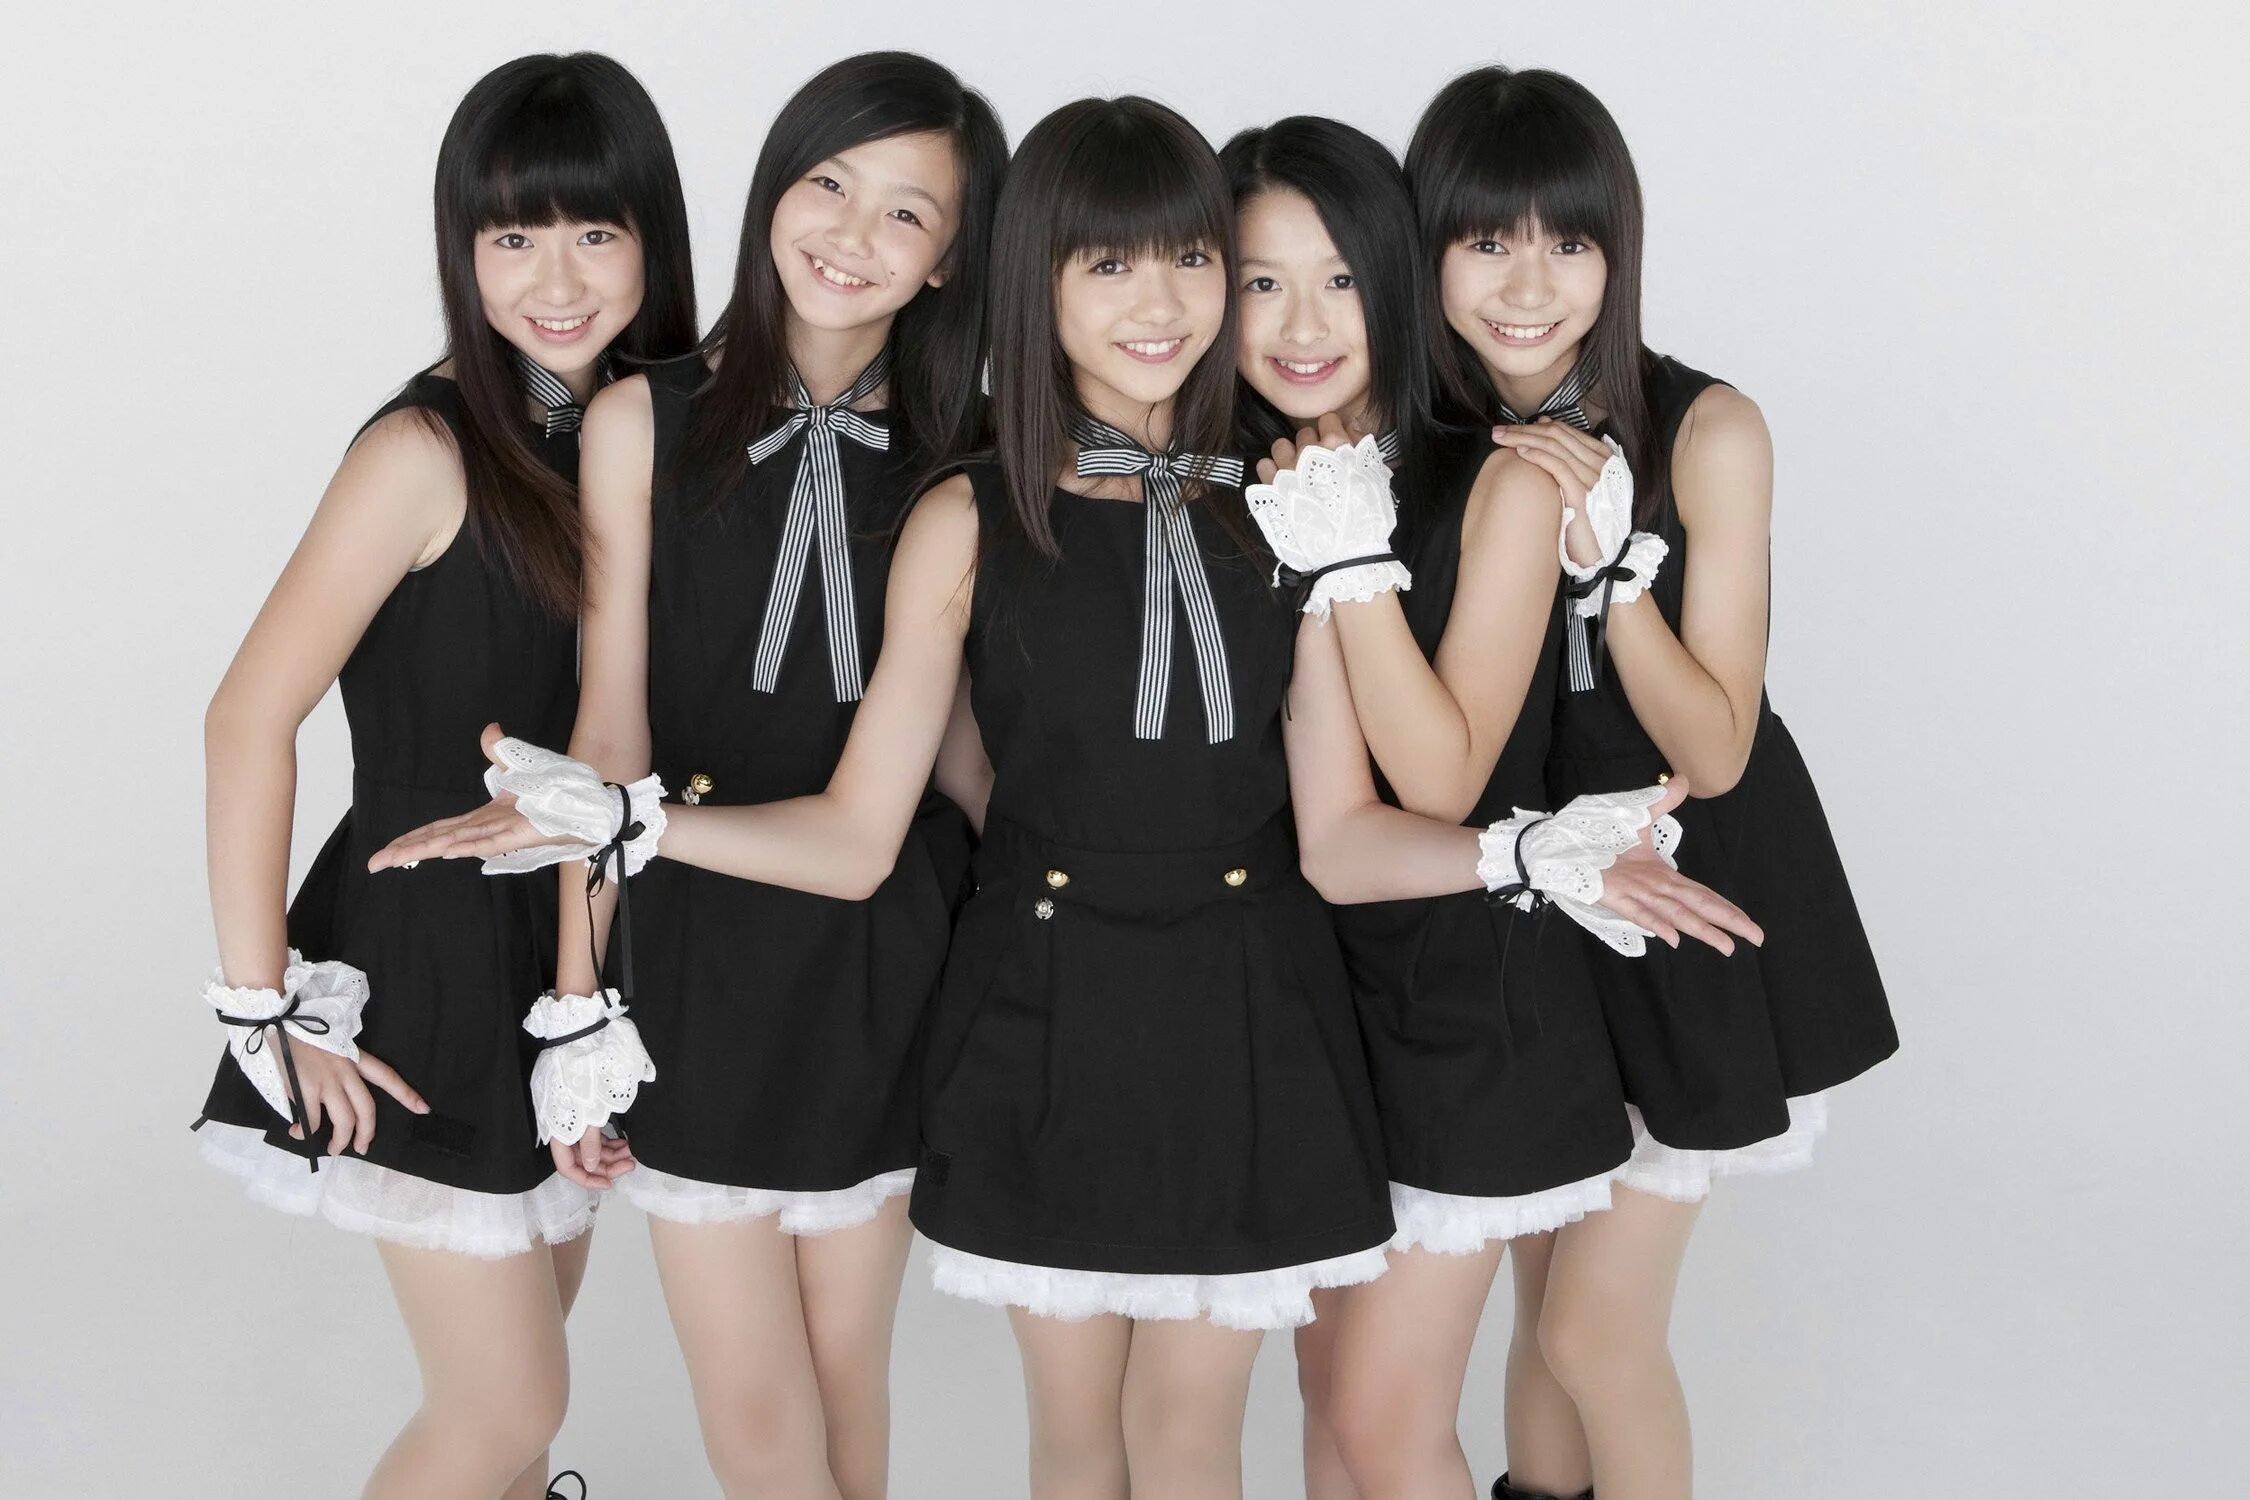 Tokyo girl. Группа Tokyo girls’ Style. Токио девушки. Токийские девушки. Токио японские девушки ансамбль.